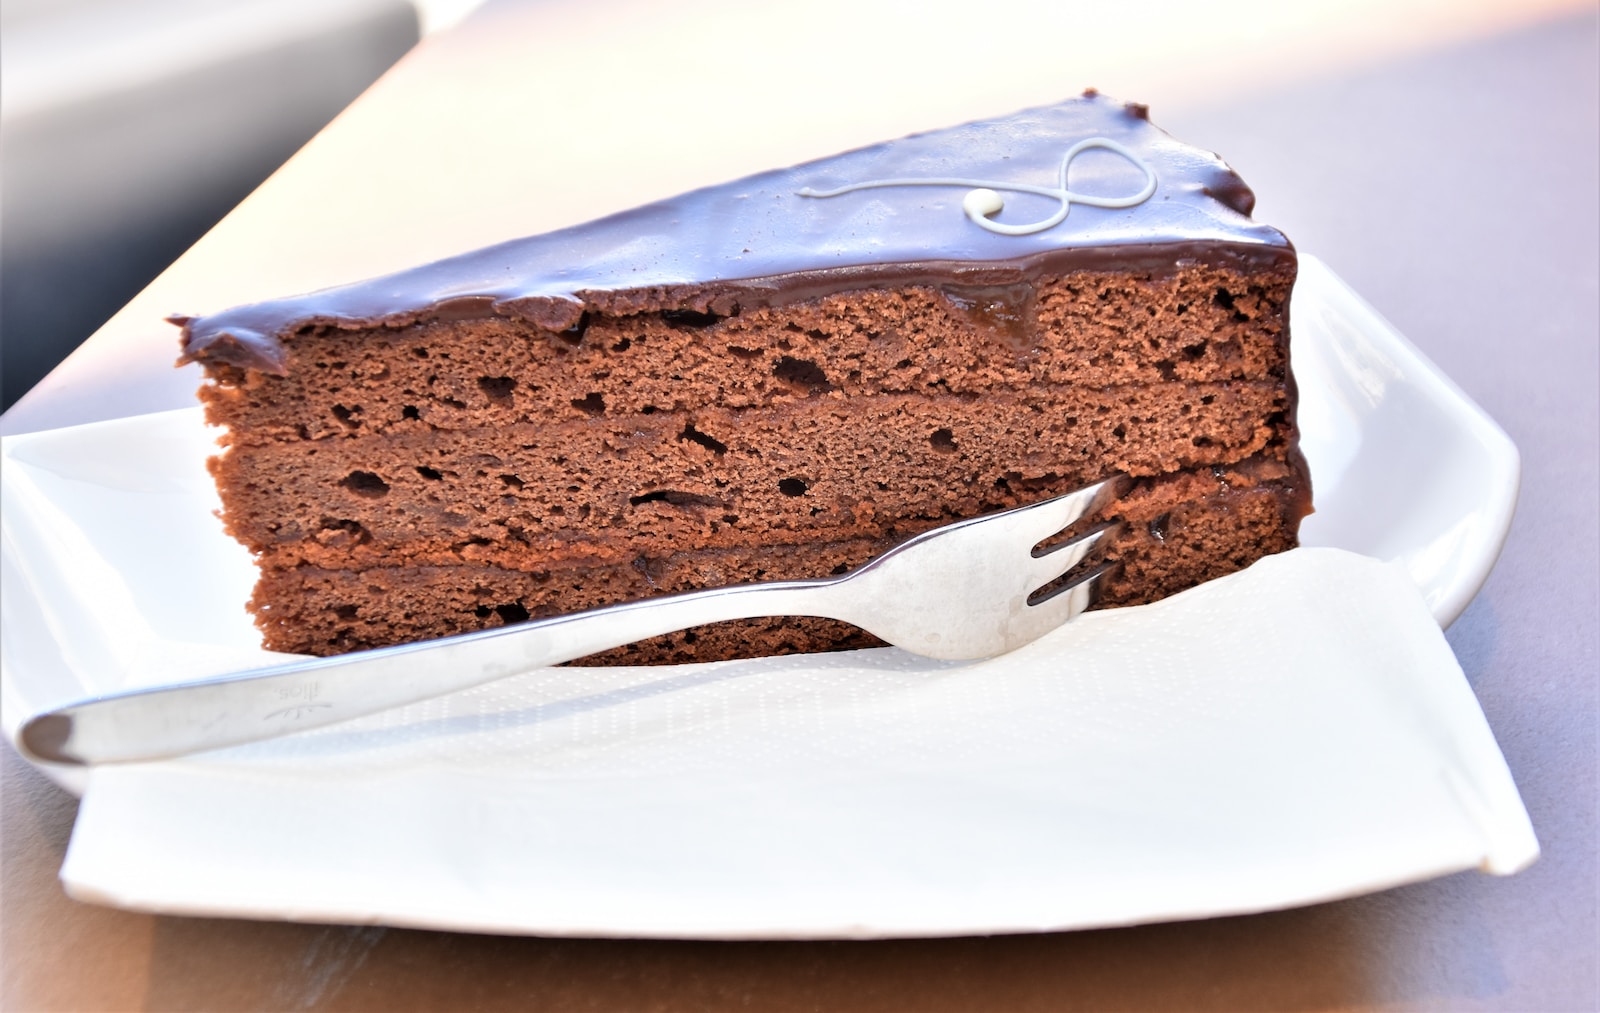 chocolate cake on white ceramic plate